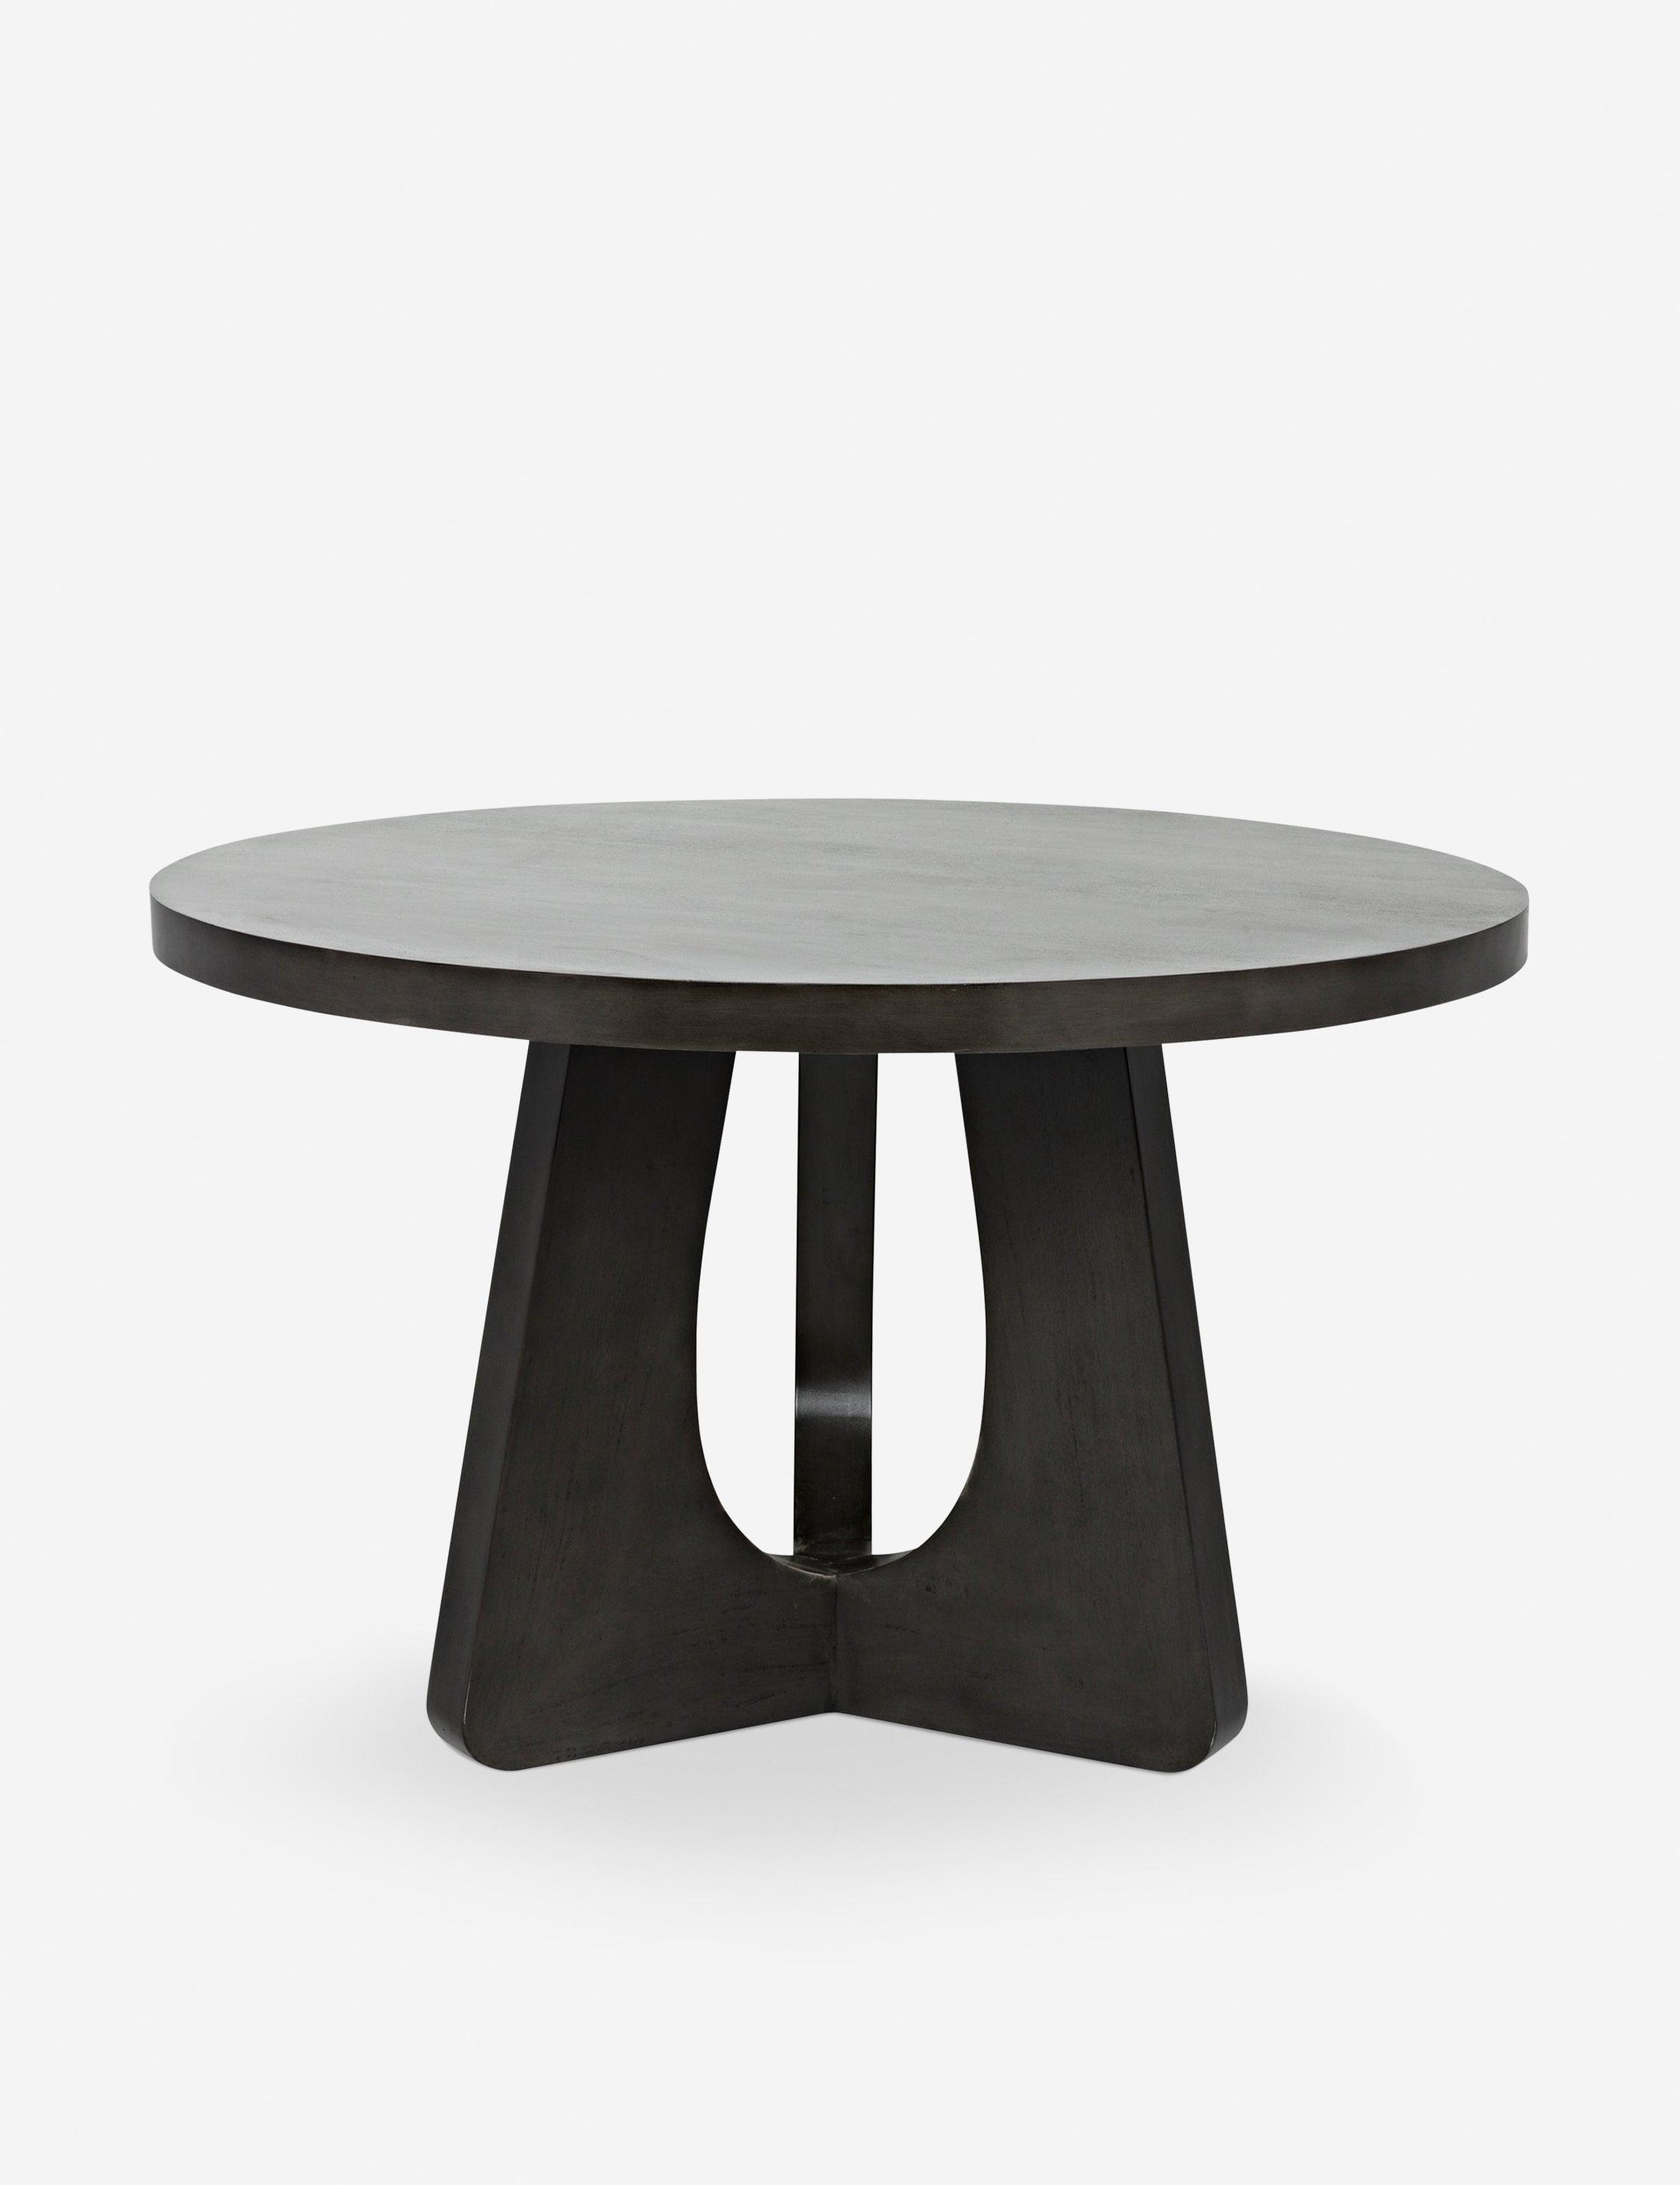 Kumeo 48" Round Light Gray-Dark Brown Mid-Century Modern Dining Table